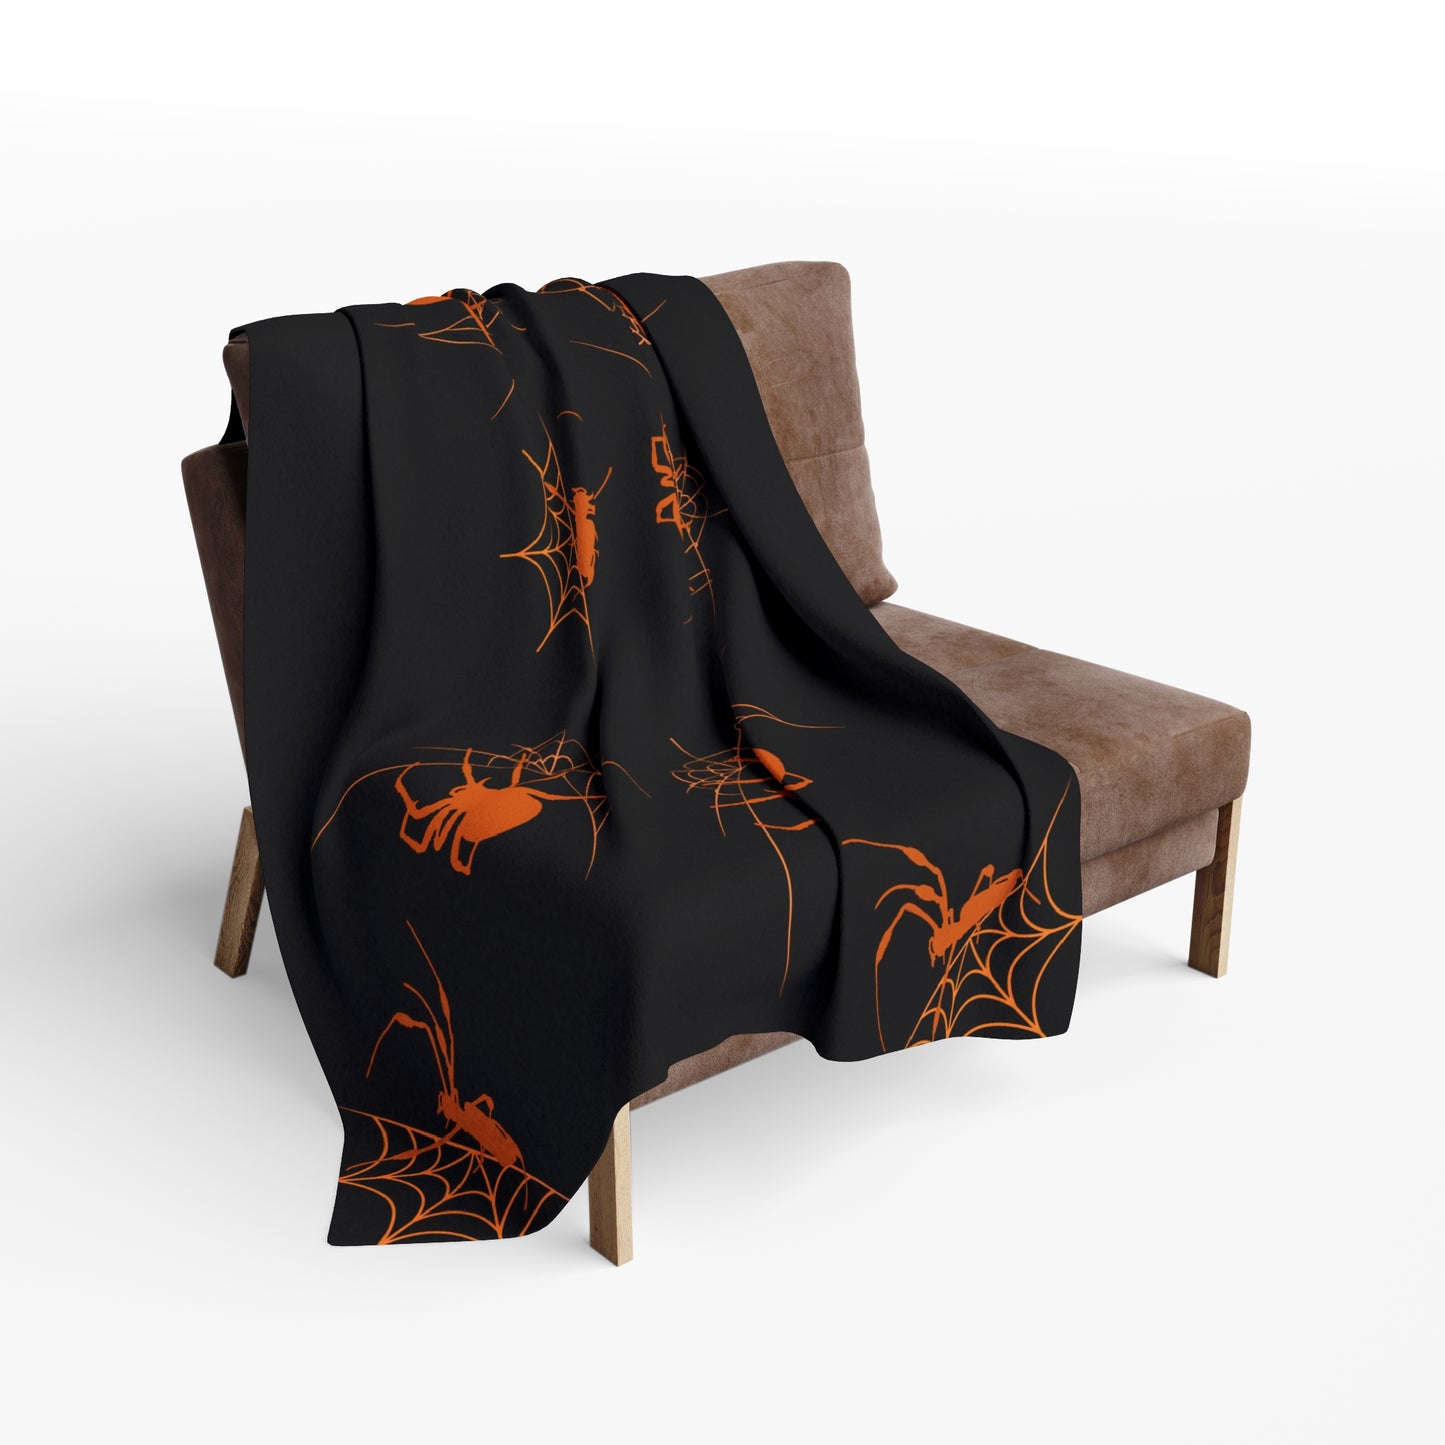 Spiders in Pumpkin | Microfiber Blanket